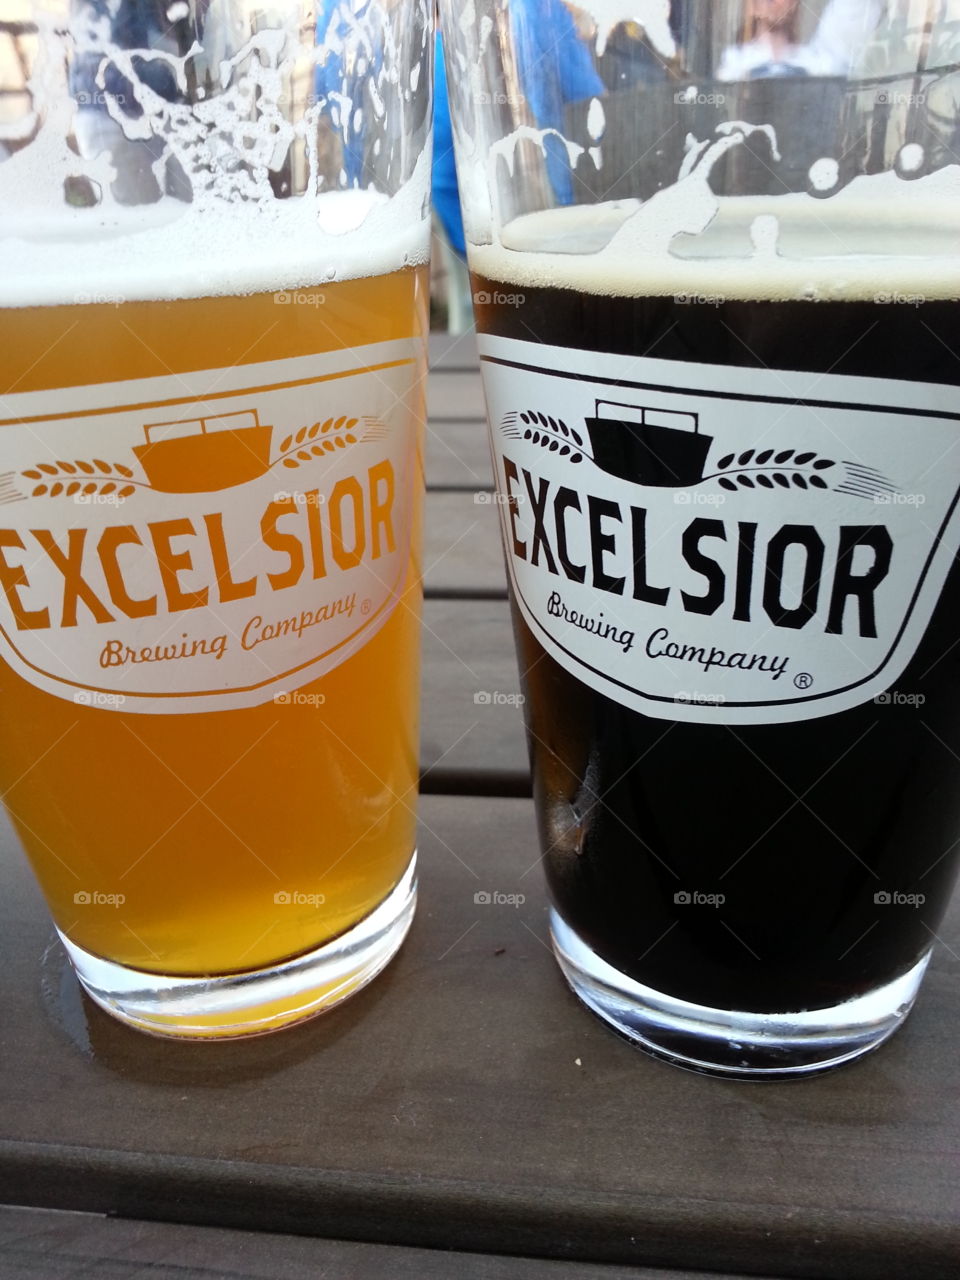 Excelsior's beers